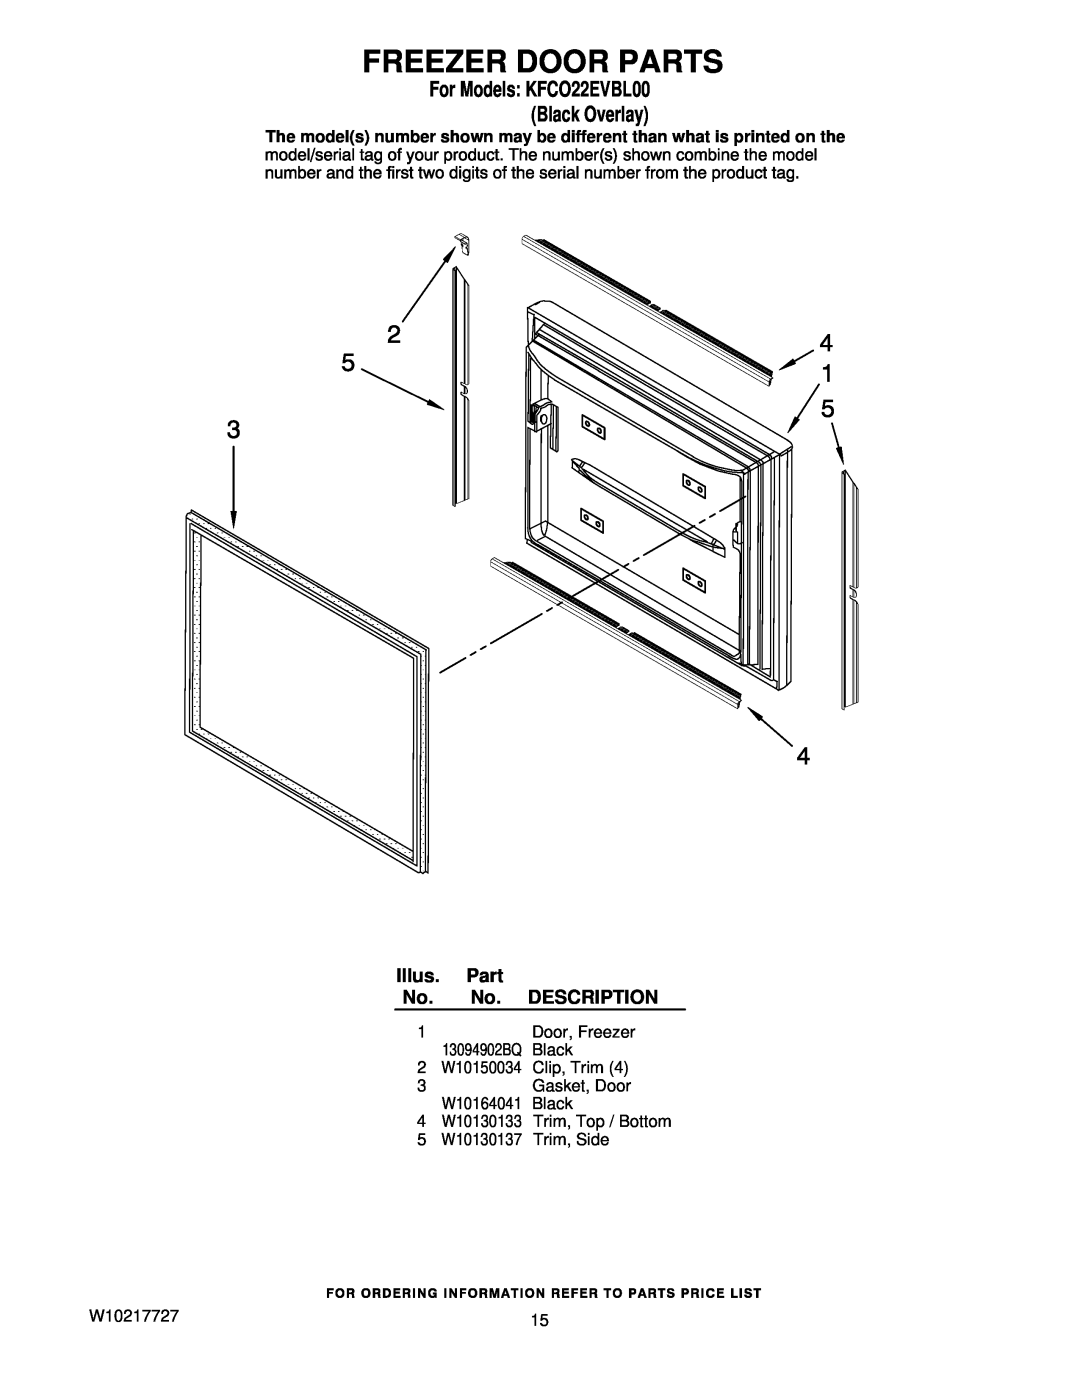 KitchenAid manual Freezer Door Parts, For Models KFCO22EVBL00 Black Overlay 